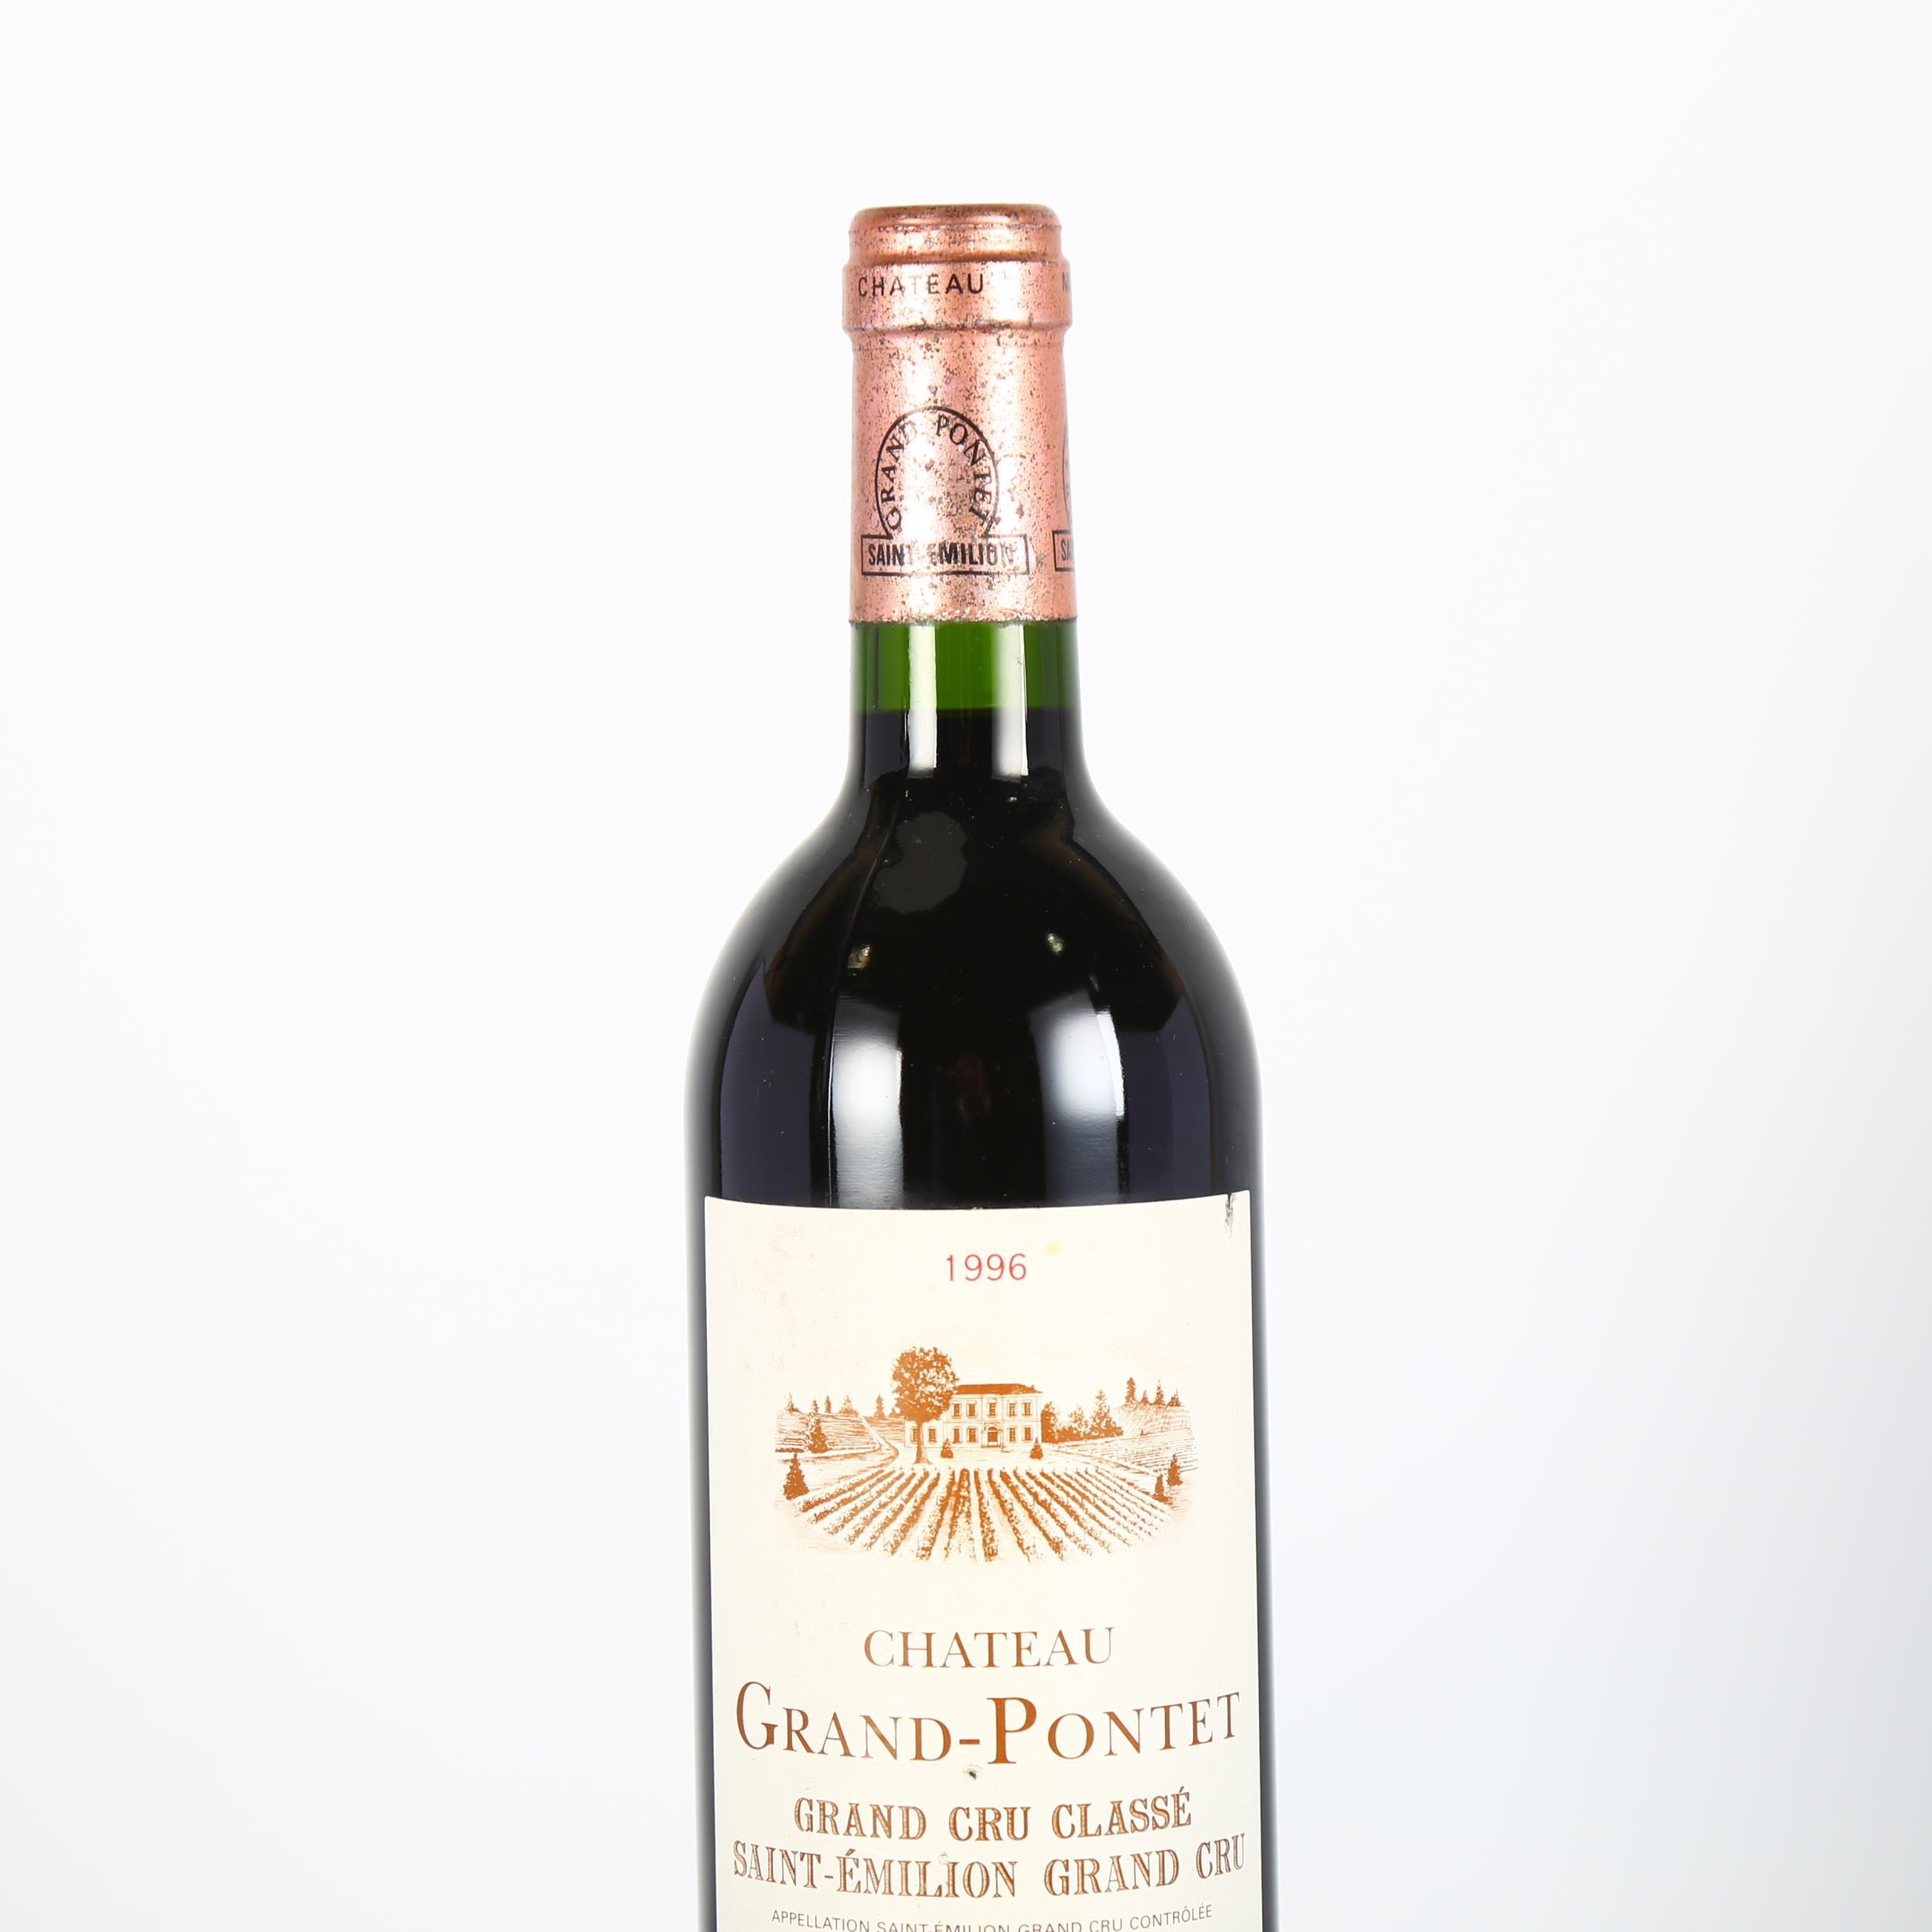 Chateau Grand-Pontet 1996, St Emilion Grand Cru x 1 bottle. Bordeaux red wine - Image 2 of 3